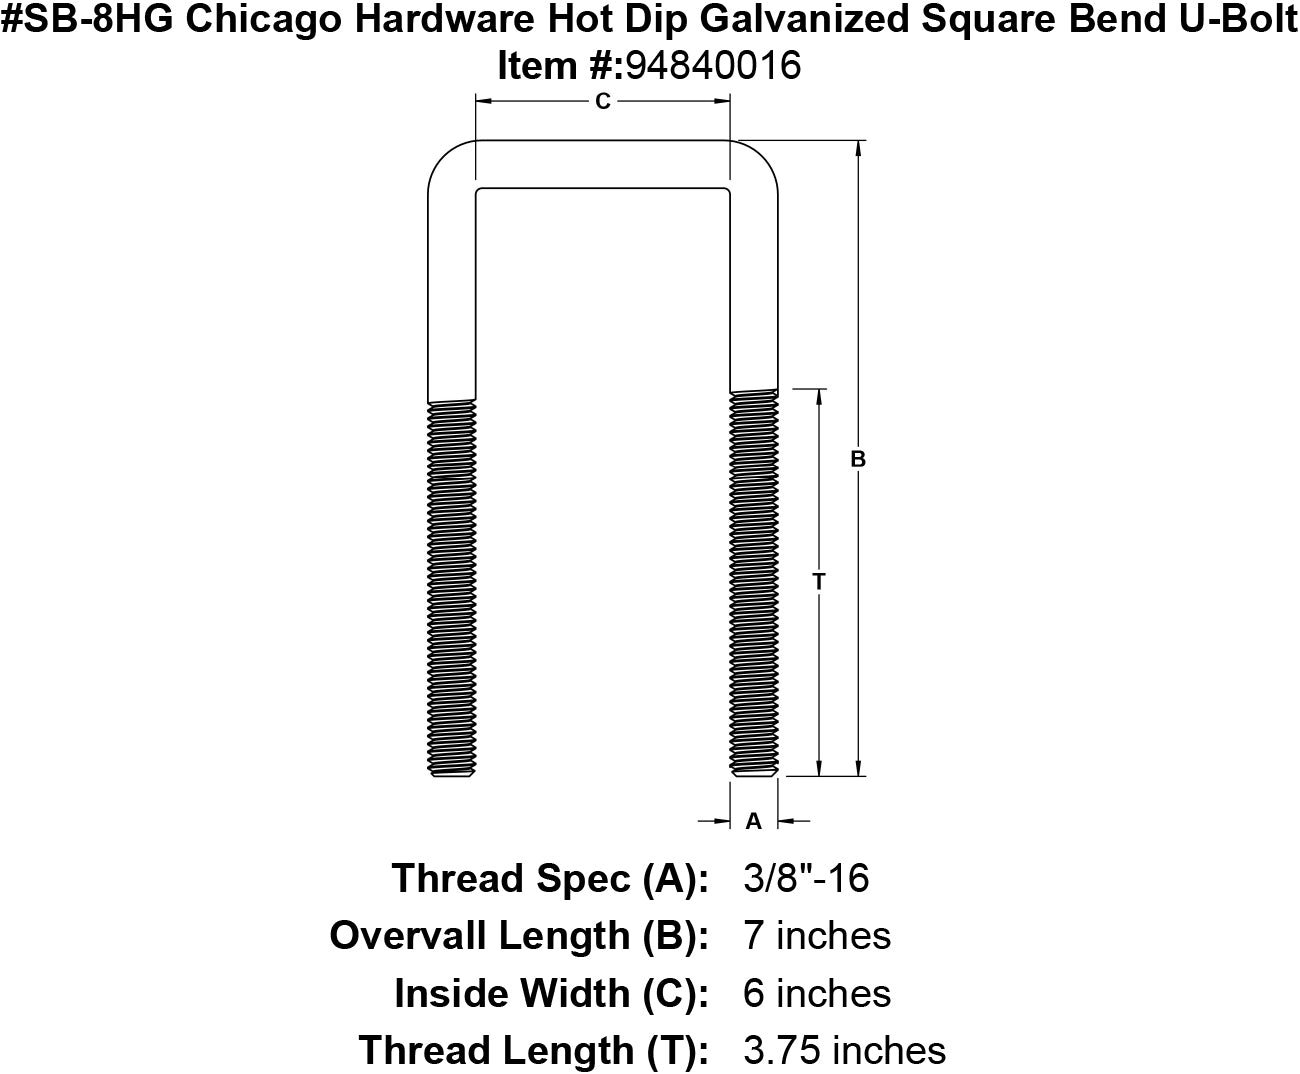 Chicago Hardware Hot Dip Galvanized Square Bend U-Bolts